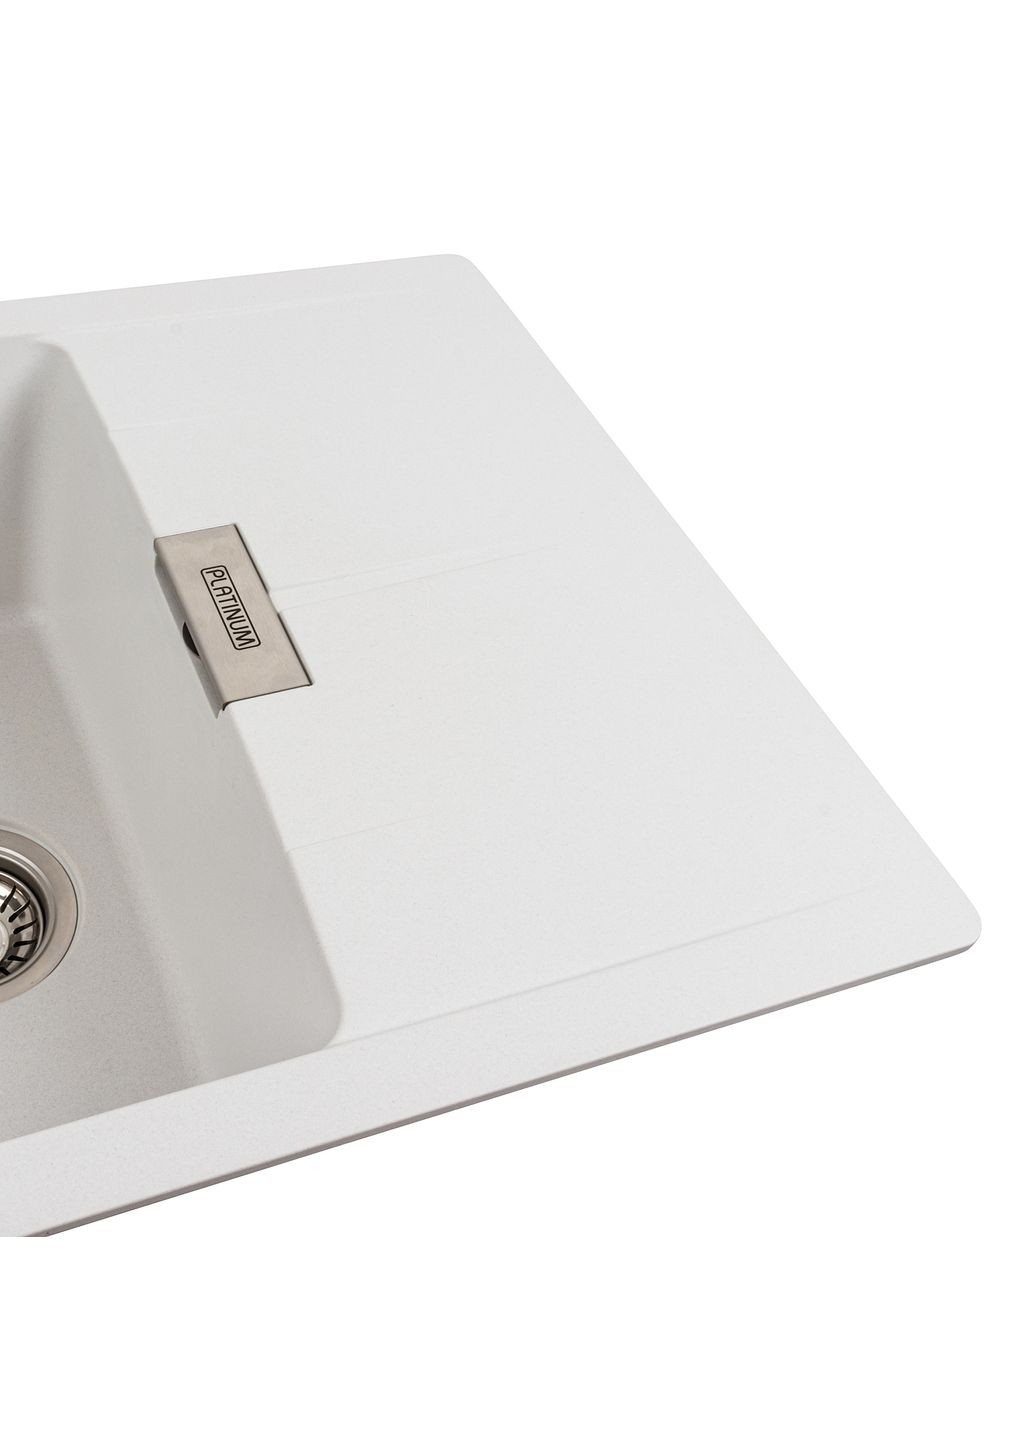 Гранітна мийка для кухні 6250 ZIRKONE матова білосніжна Platinum (269795014)